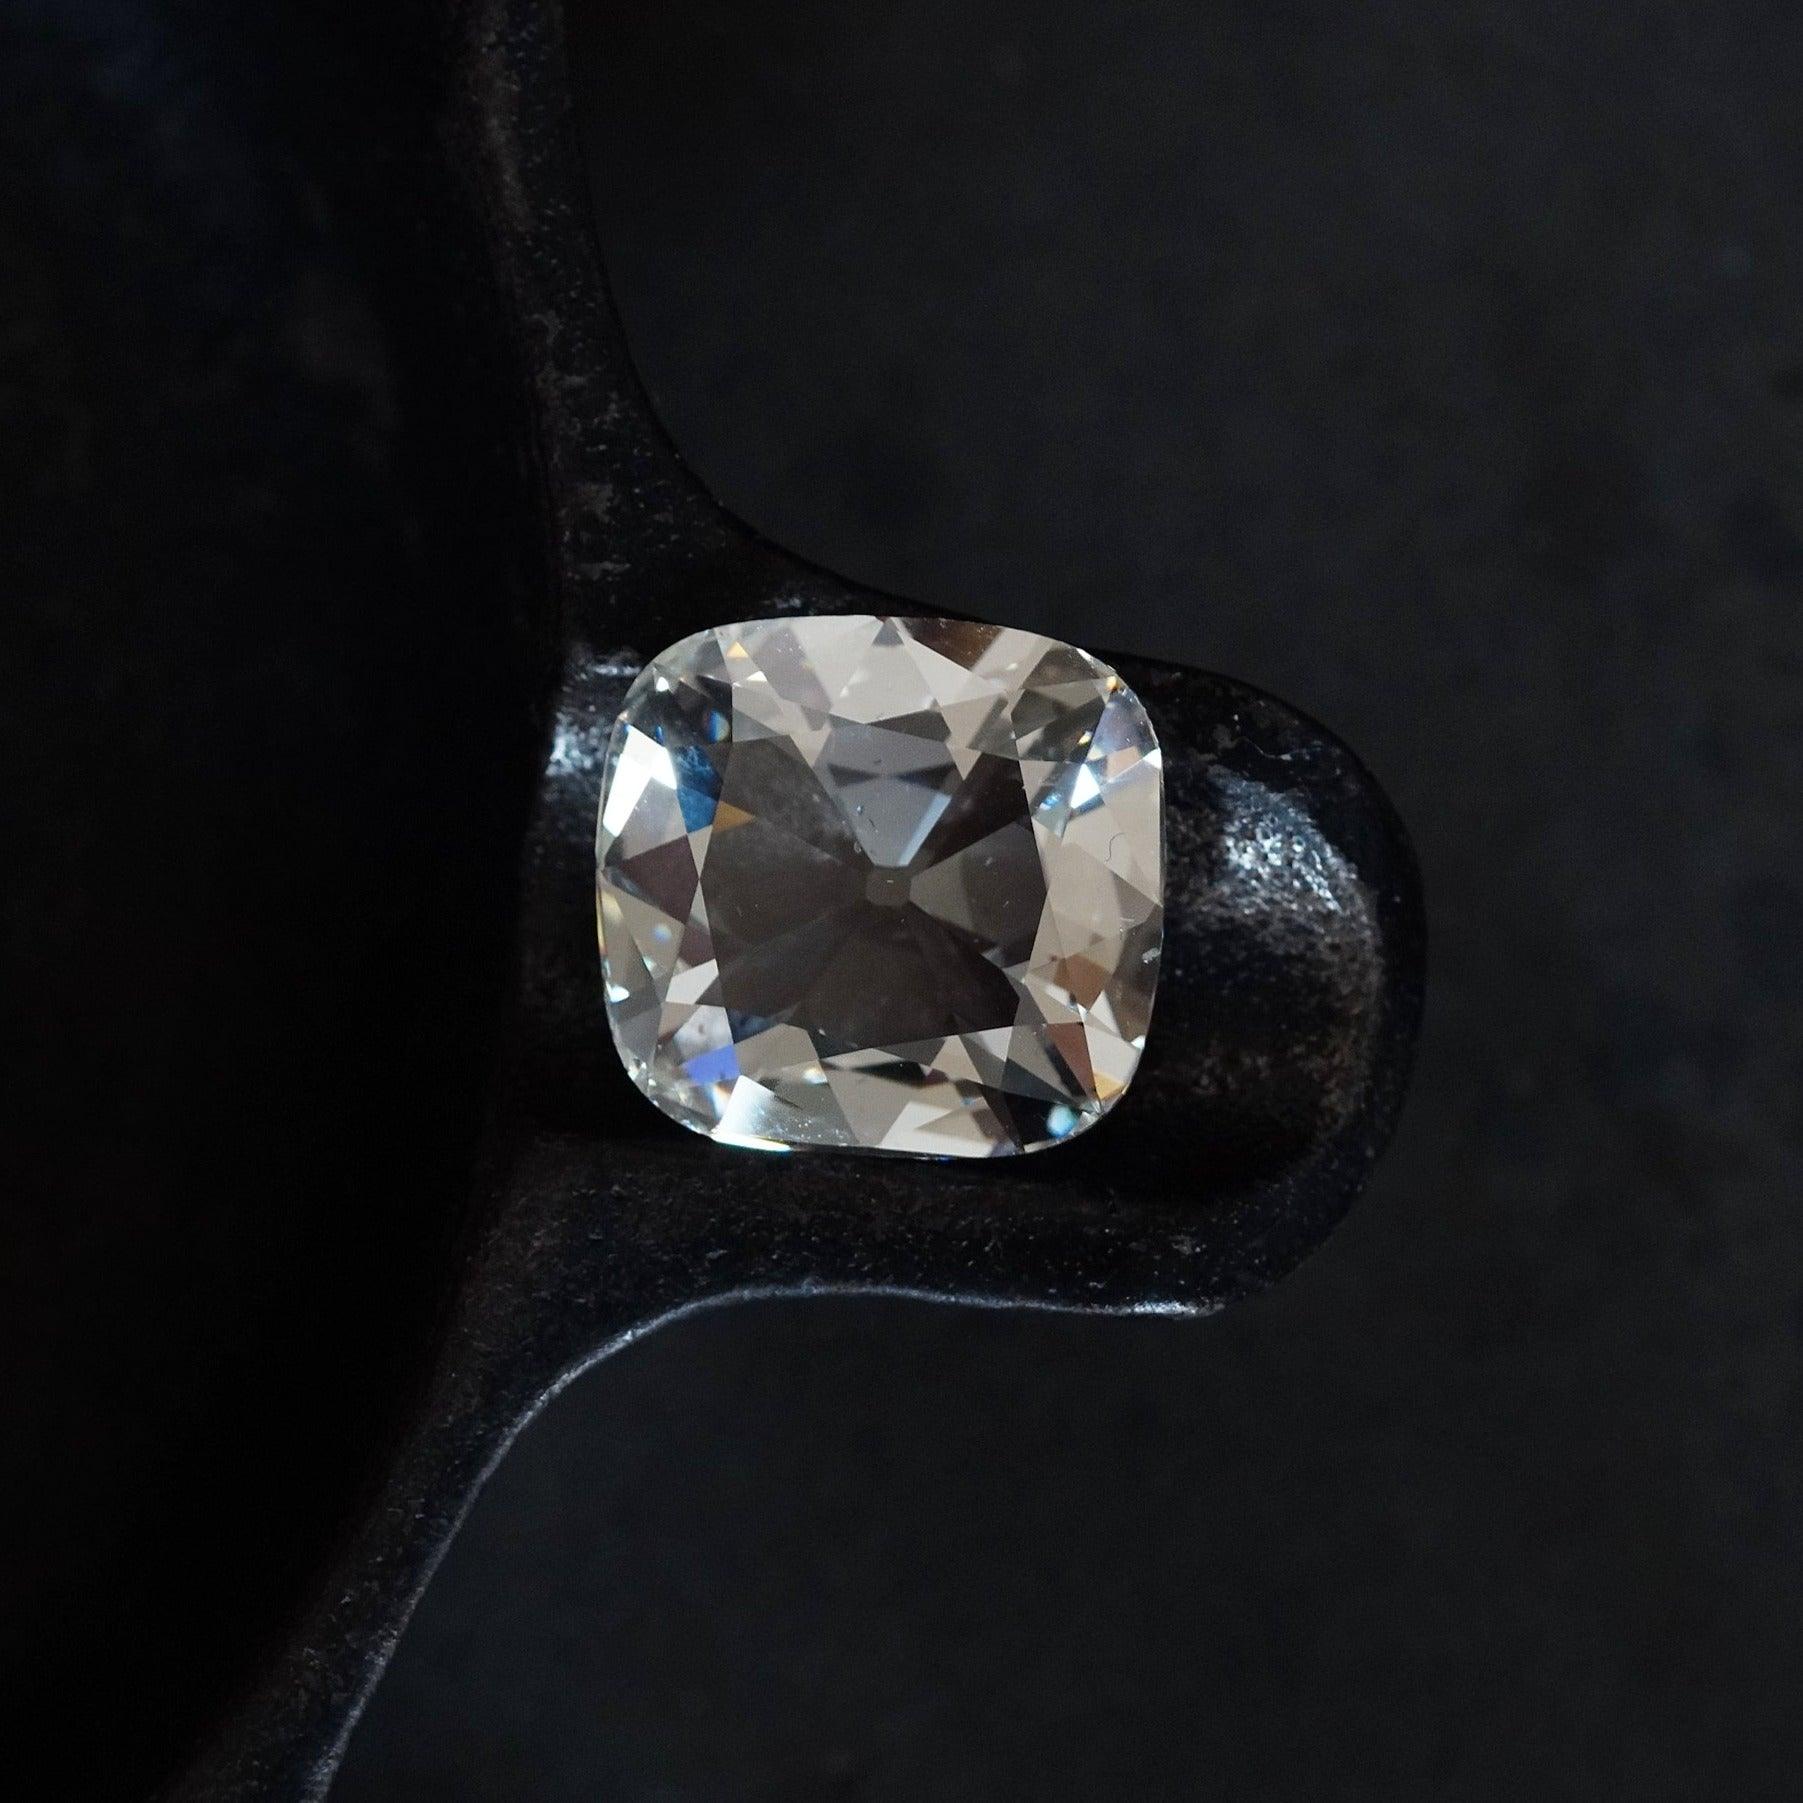 Exquisite 8.12 Carat H, SI1 Diamond - Cushion Cut - Jogani